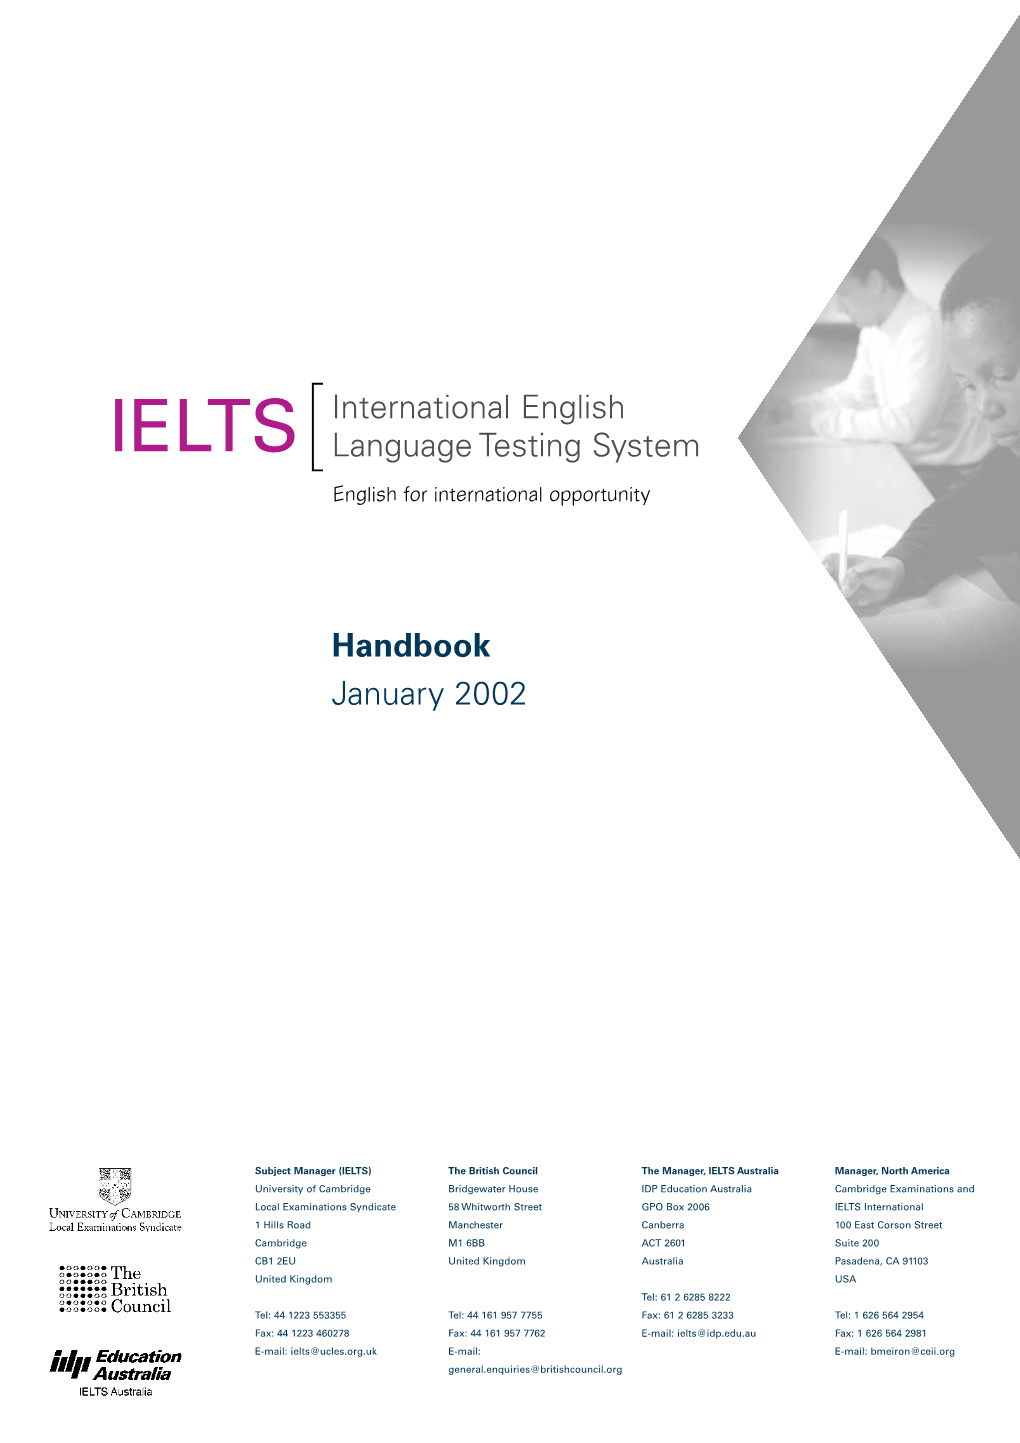 International English Language Testing System (IELTS) Superseded the English Language Testing Service (ELTS)